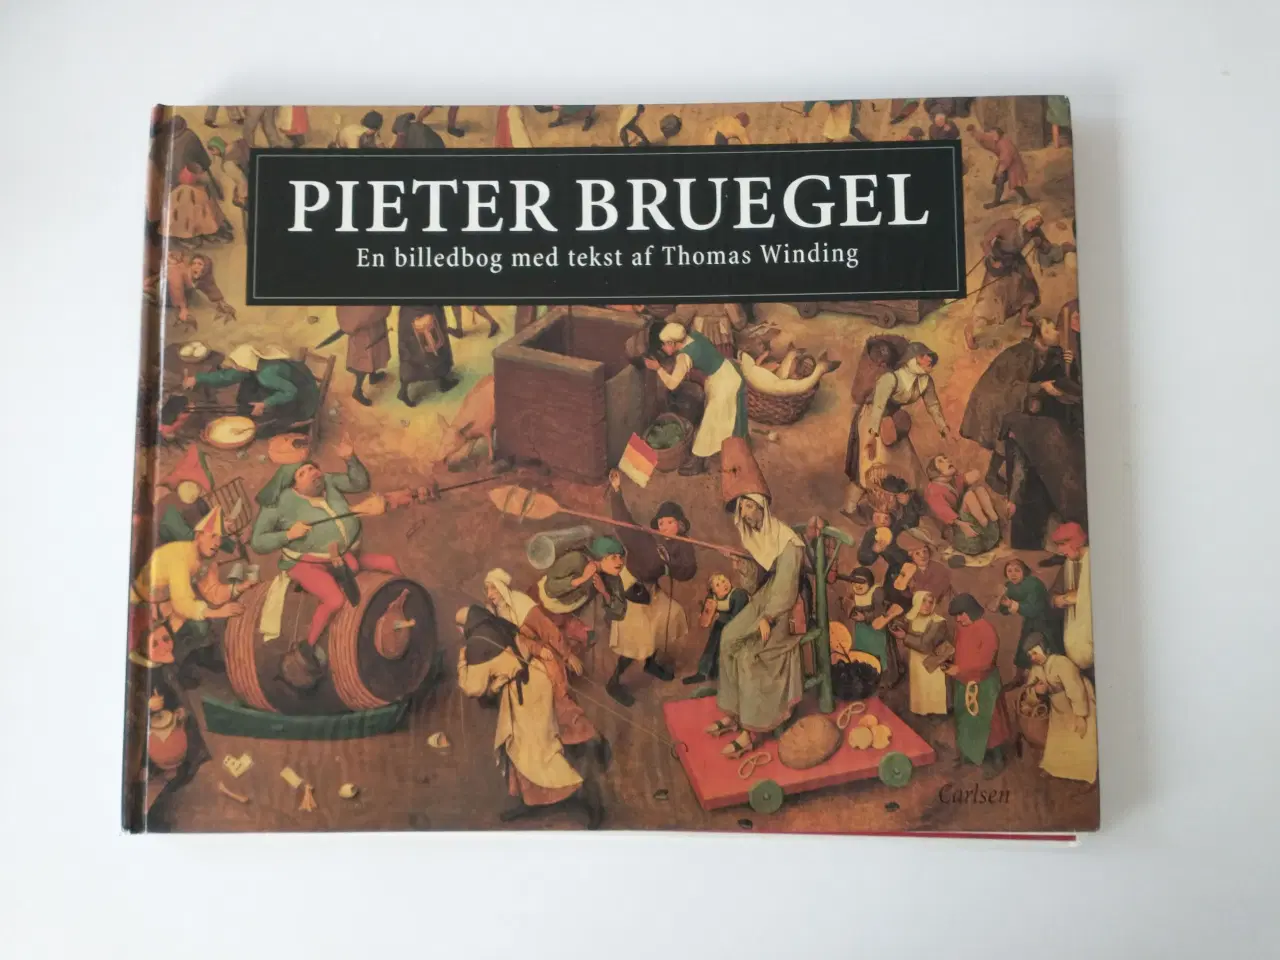 Billede 1 - Pieter Bruegel - en billedbog. Af Thomas Winding